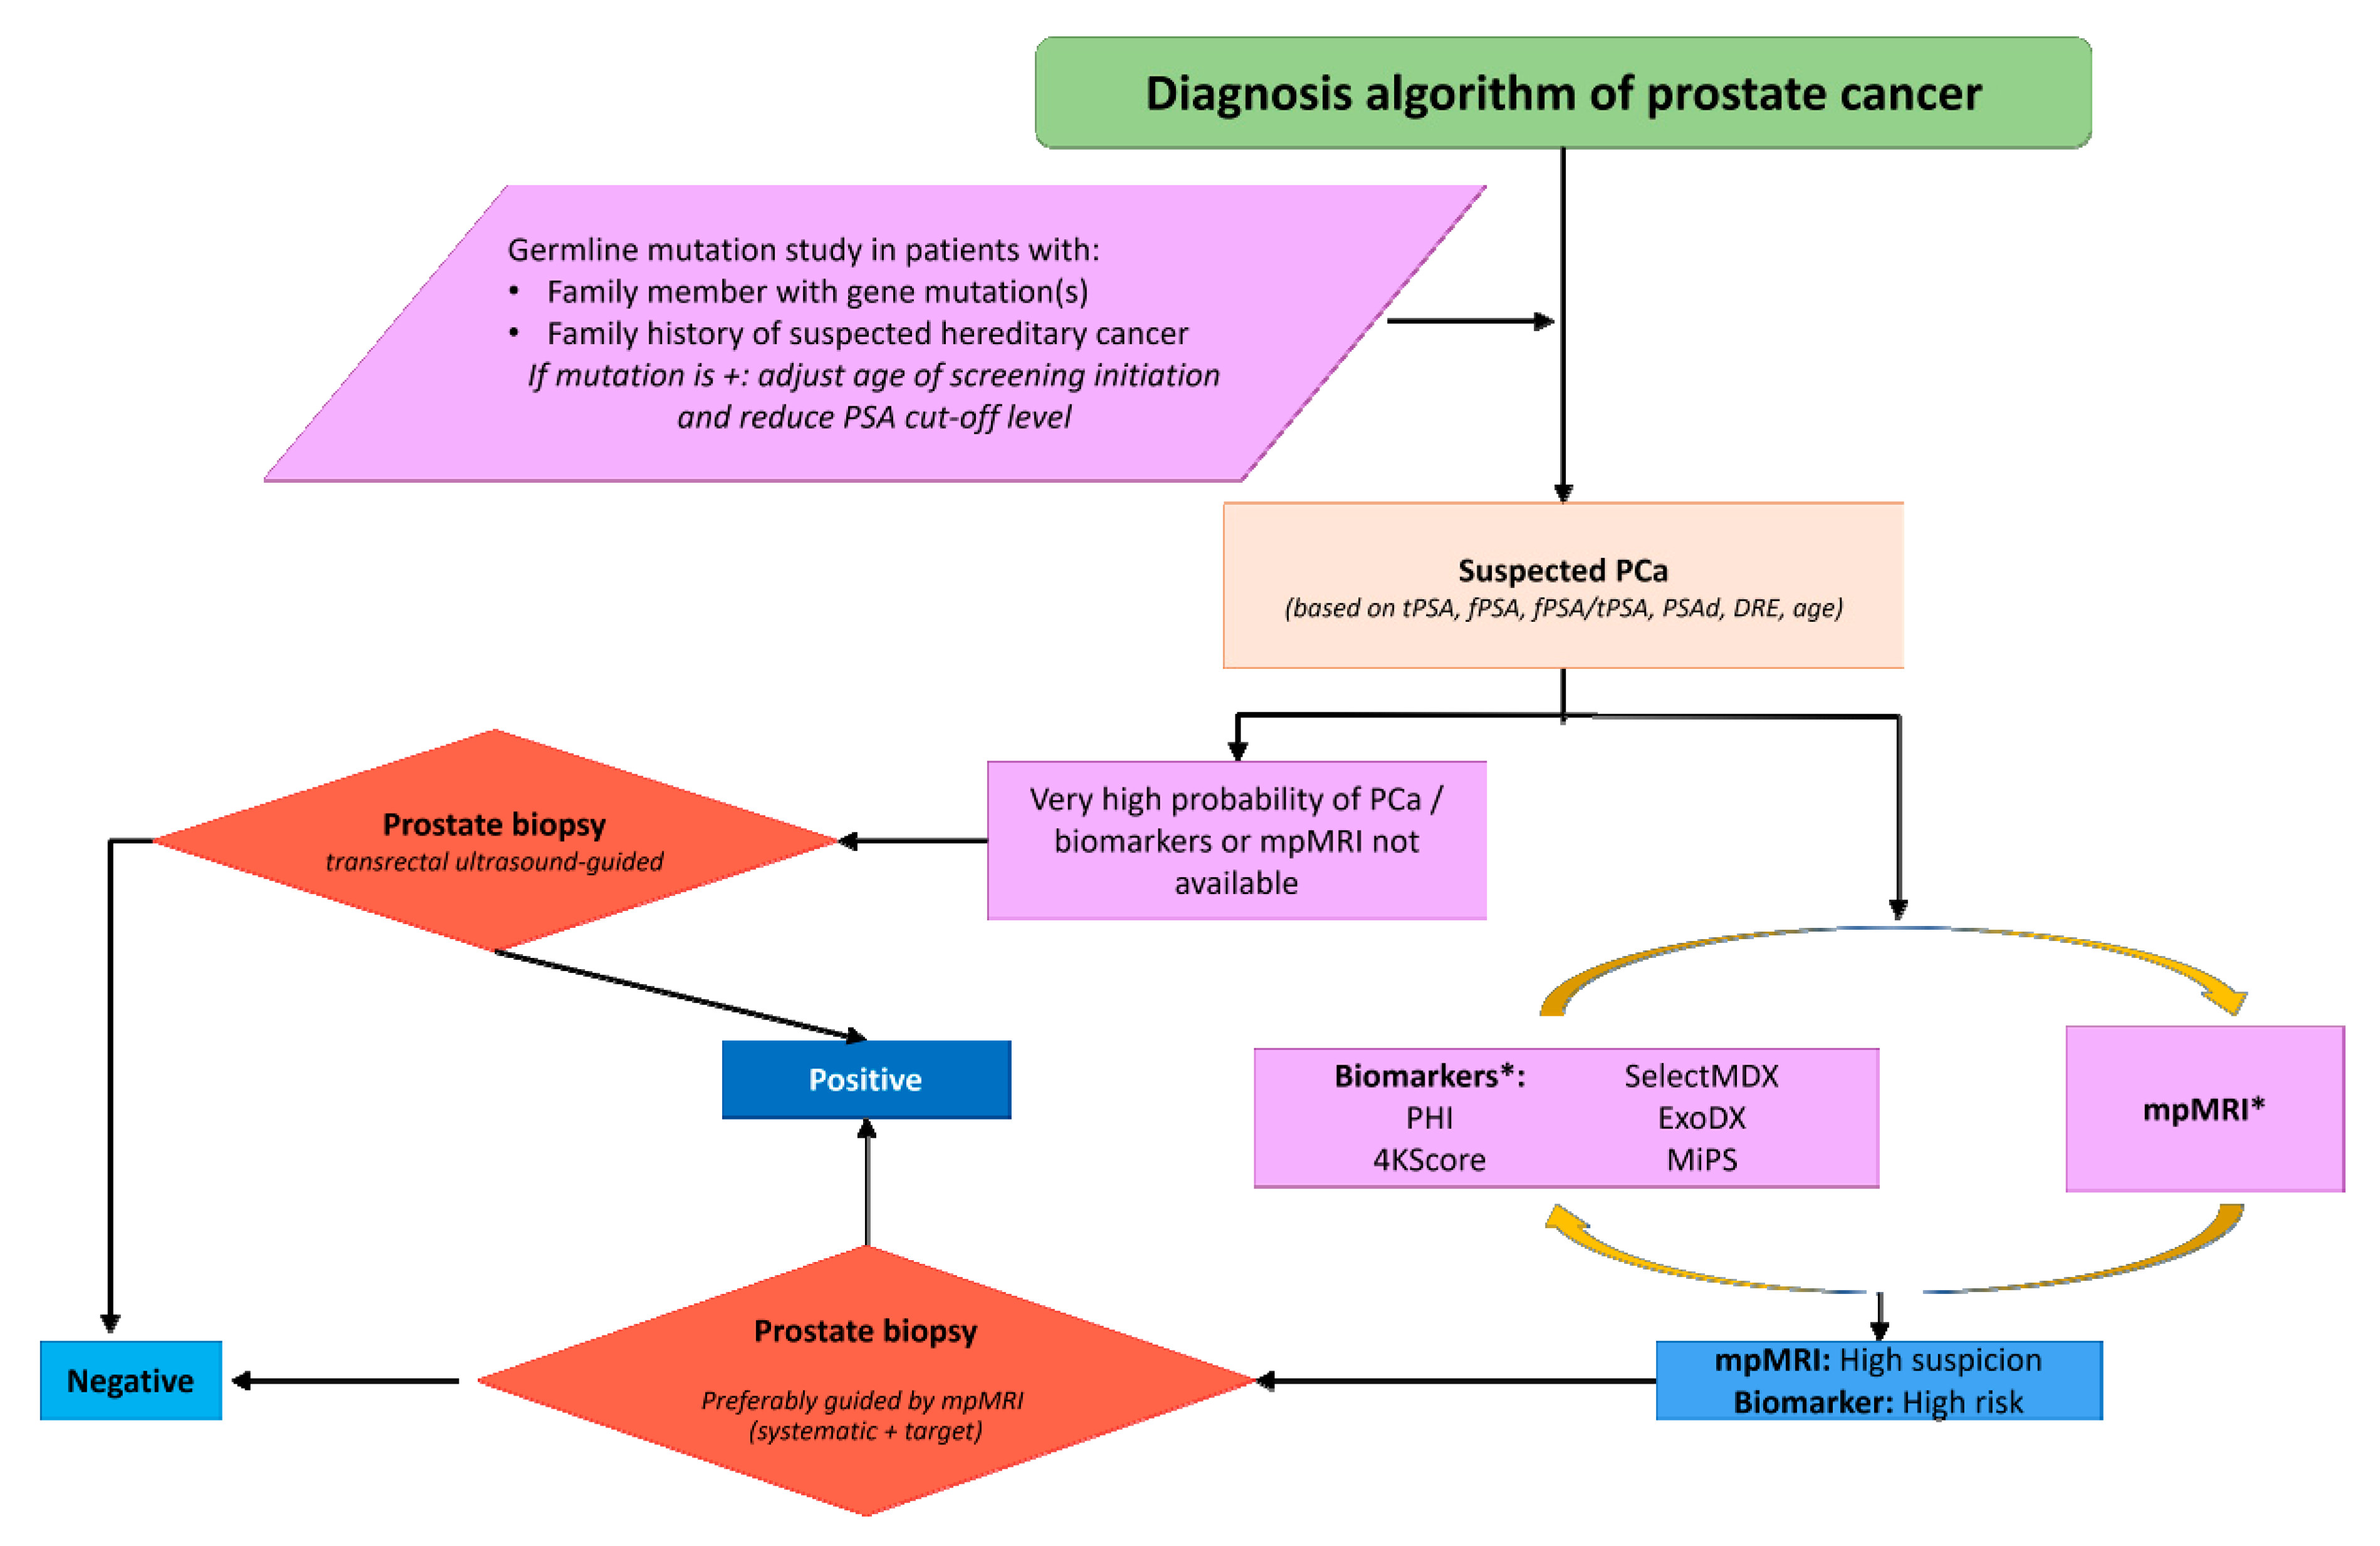 diagnosis of prostate cancer pdf